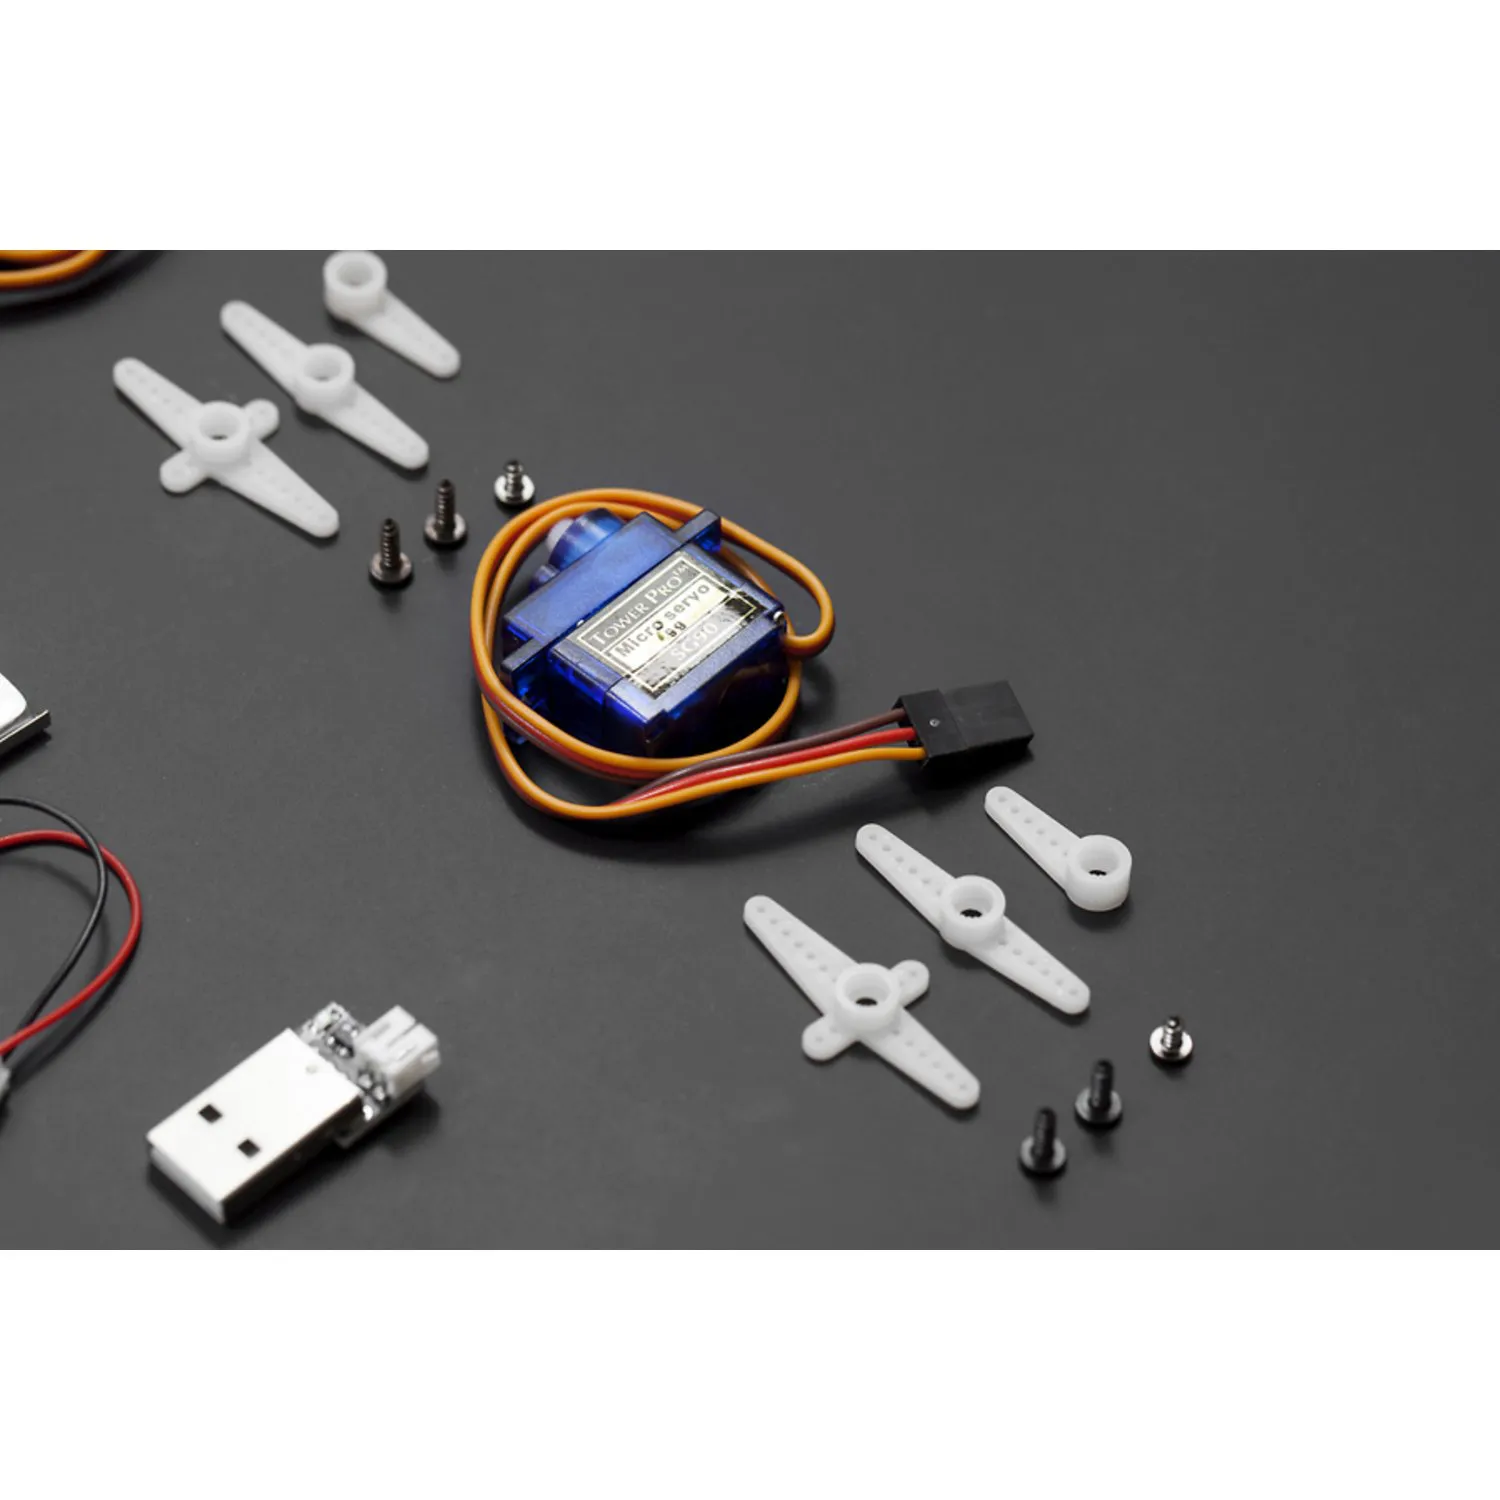 Photo of Insectbot Kit Mini robot/Easy DIY Robot on Arduino